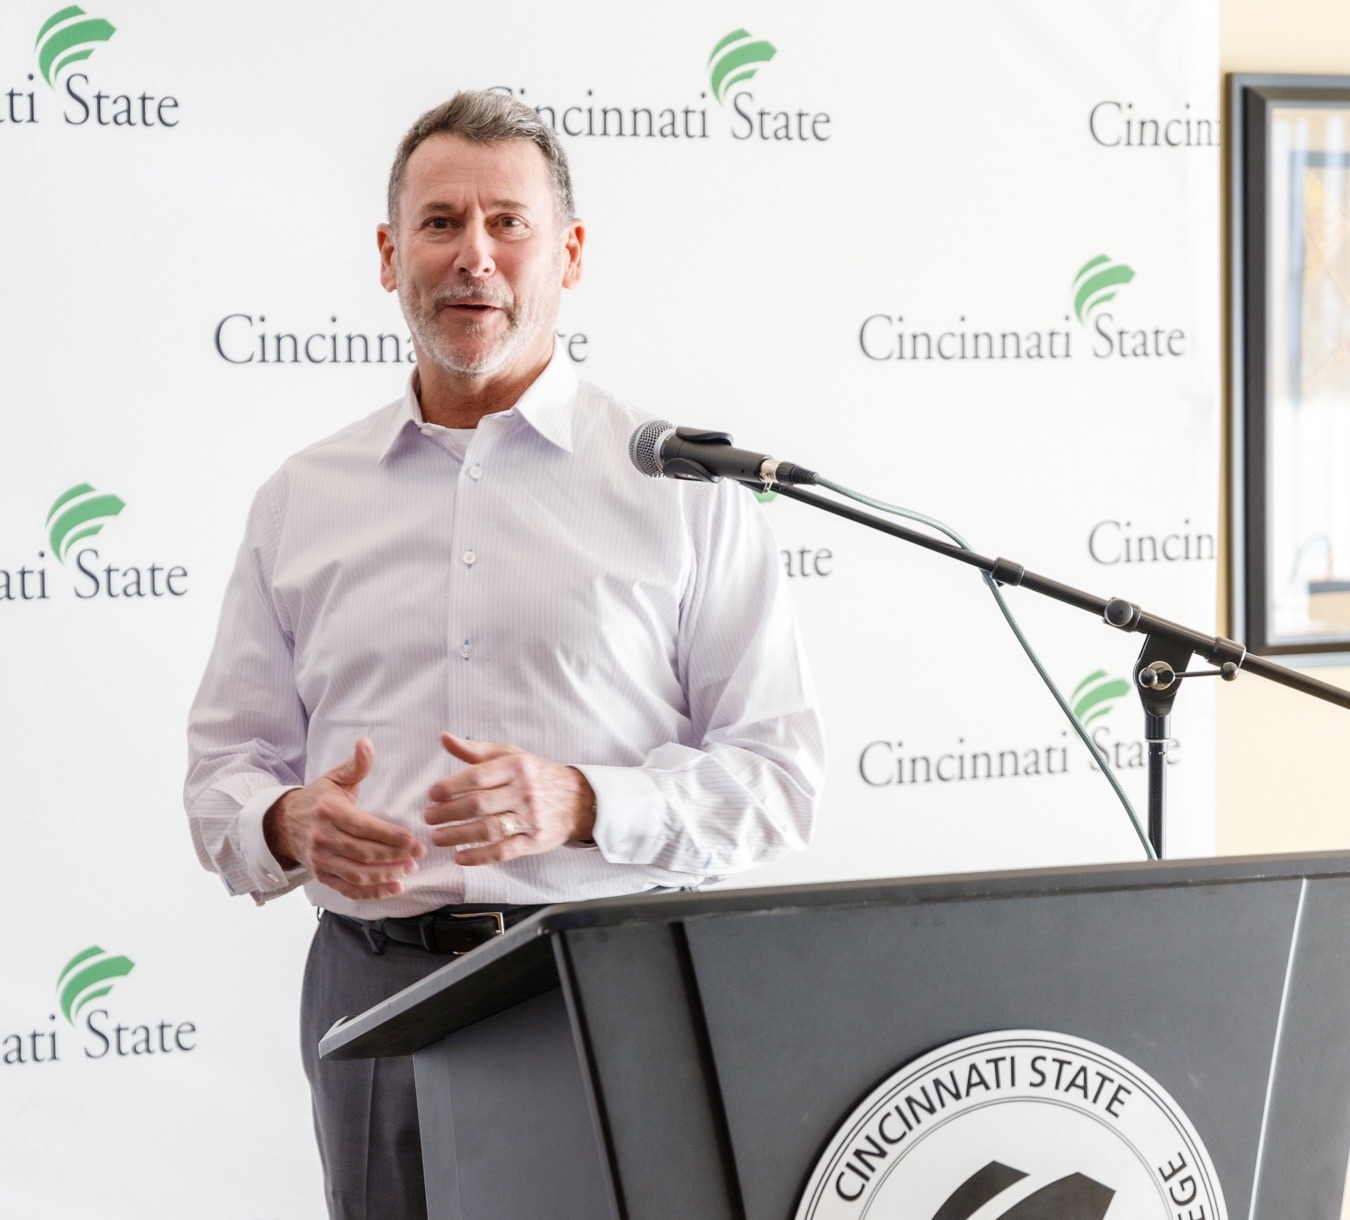 John Silverman, Cincinnati State Board of Trustees Chair